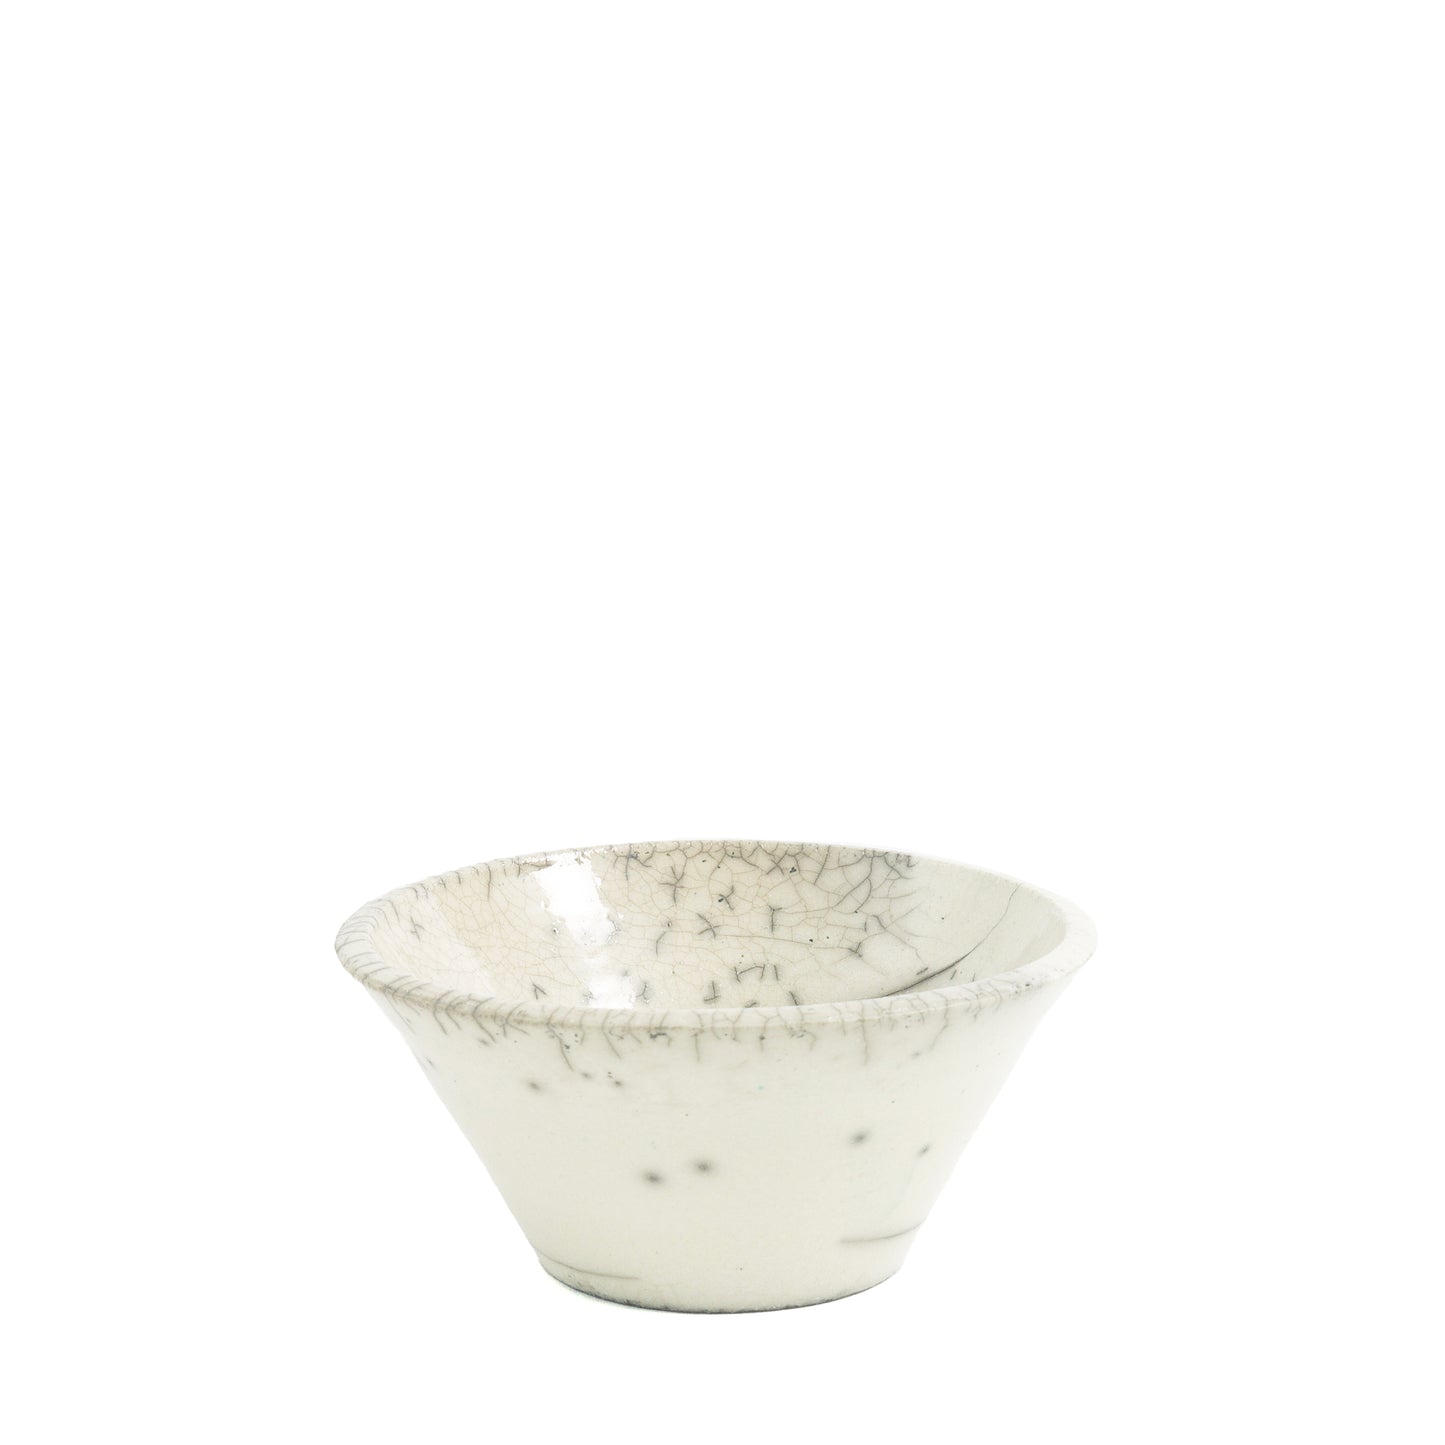 Japanese Minimalistic Moon Set of 4 Bowls Raku Ceramics Crackle White